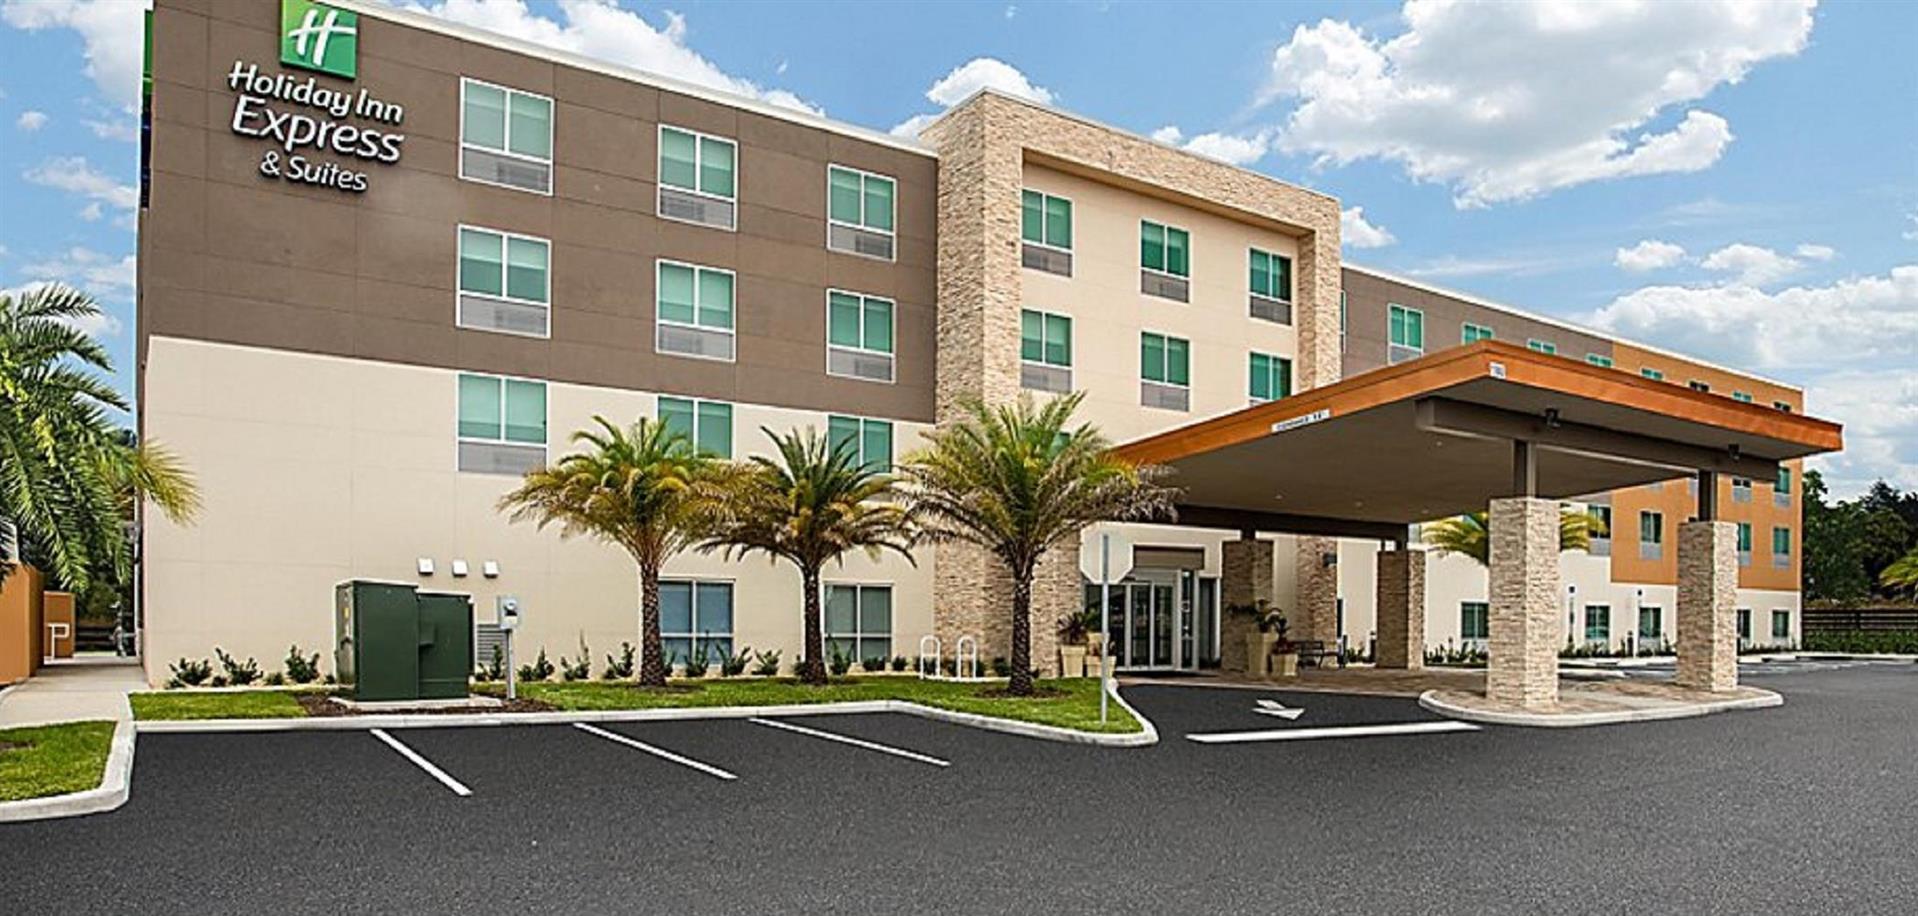 Holiday Inn Express & Suites Deland South in Deland, FL